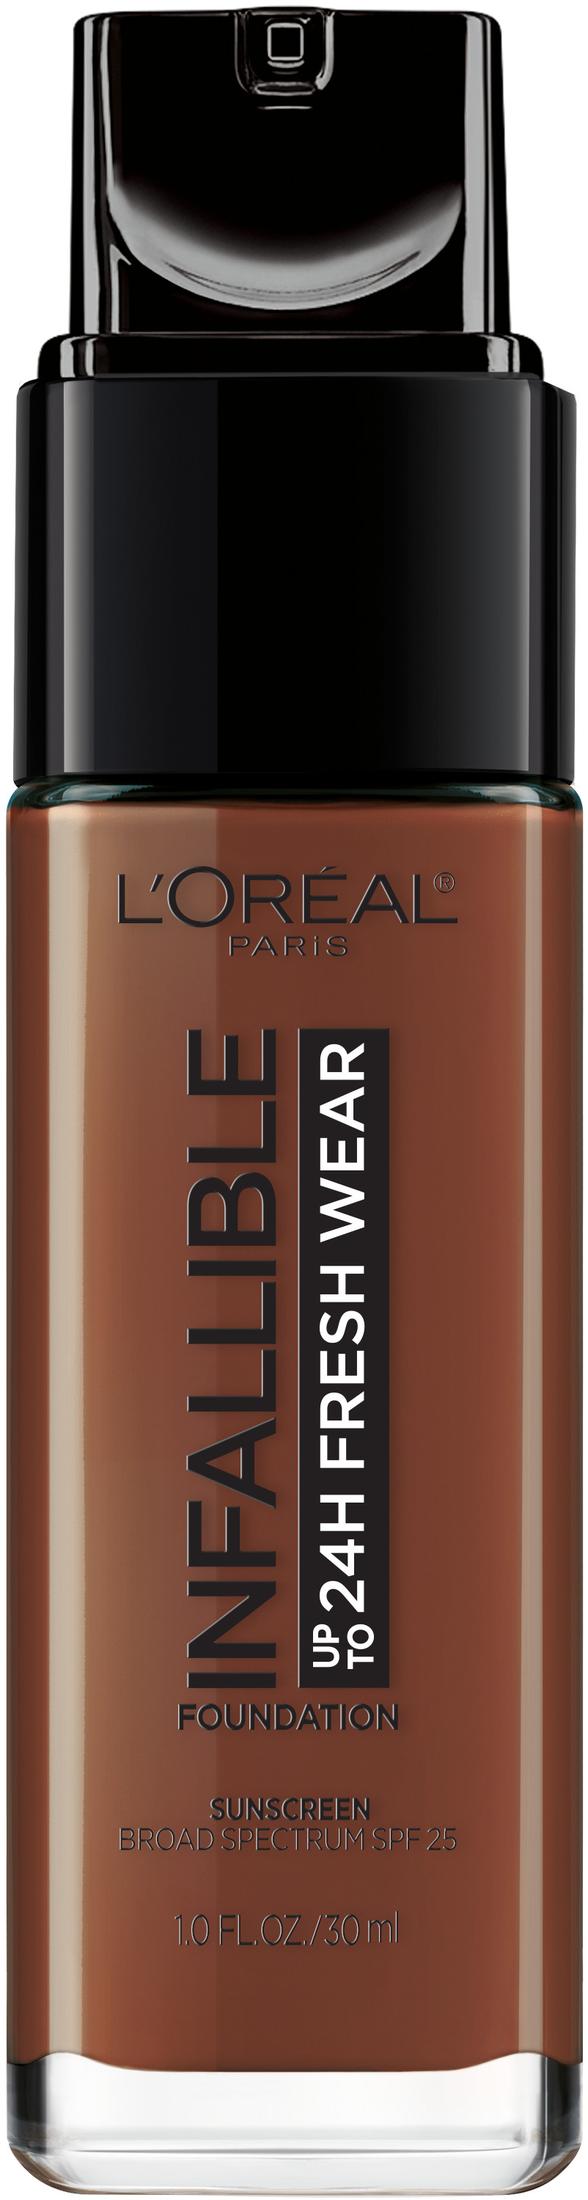 L'Oreal Paris Infallible Fresh Wear 24 Hr Liquid Foundation Makeup, 540 Mahogany, 1 fl oz - image 3 of 10